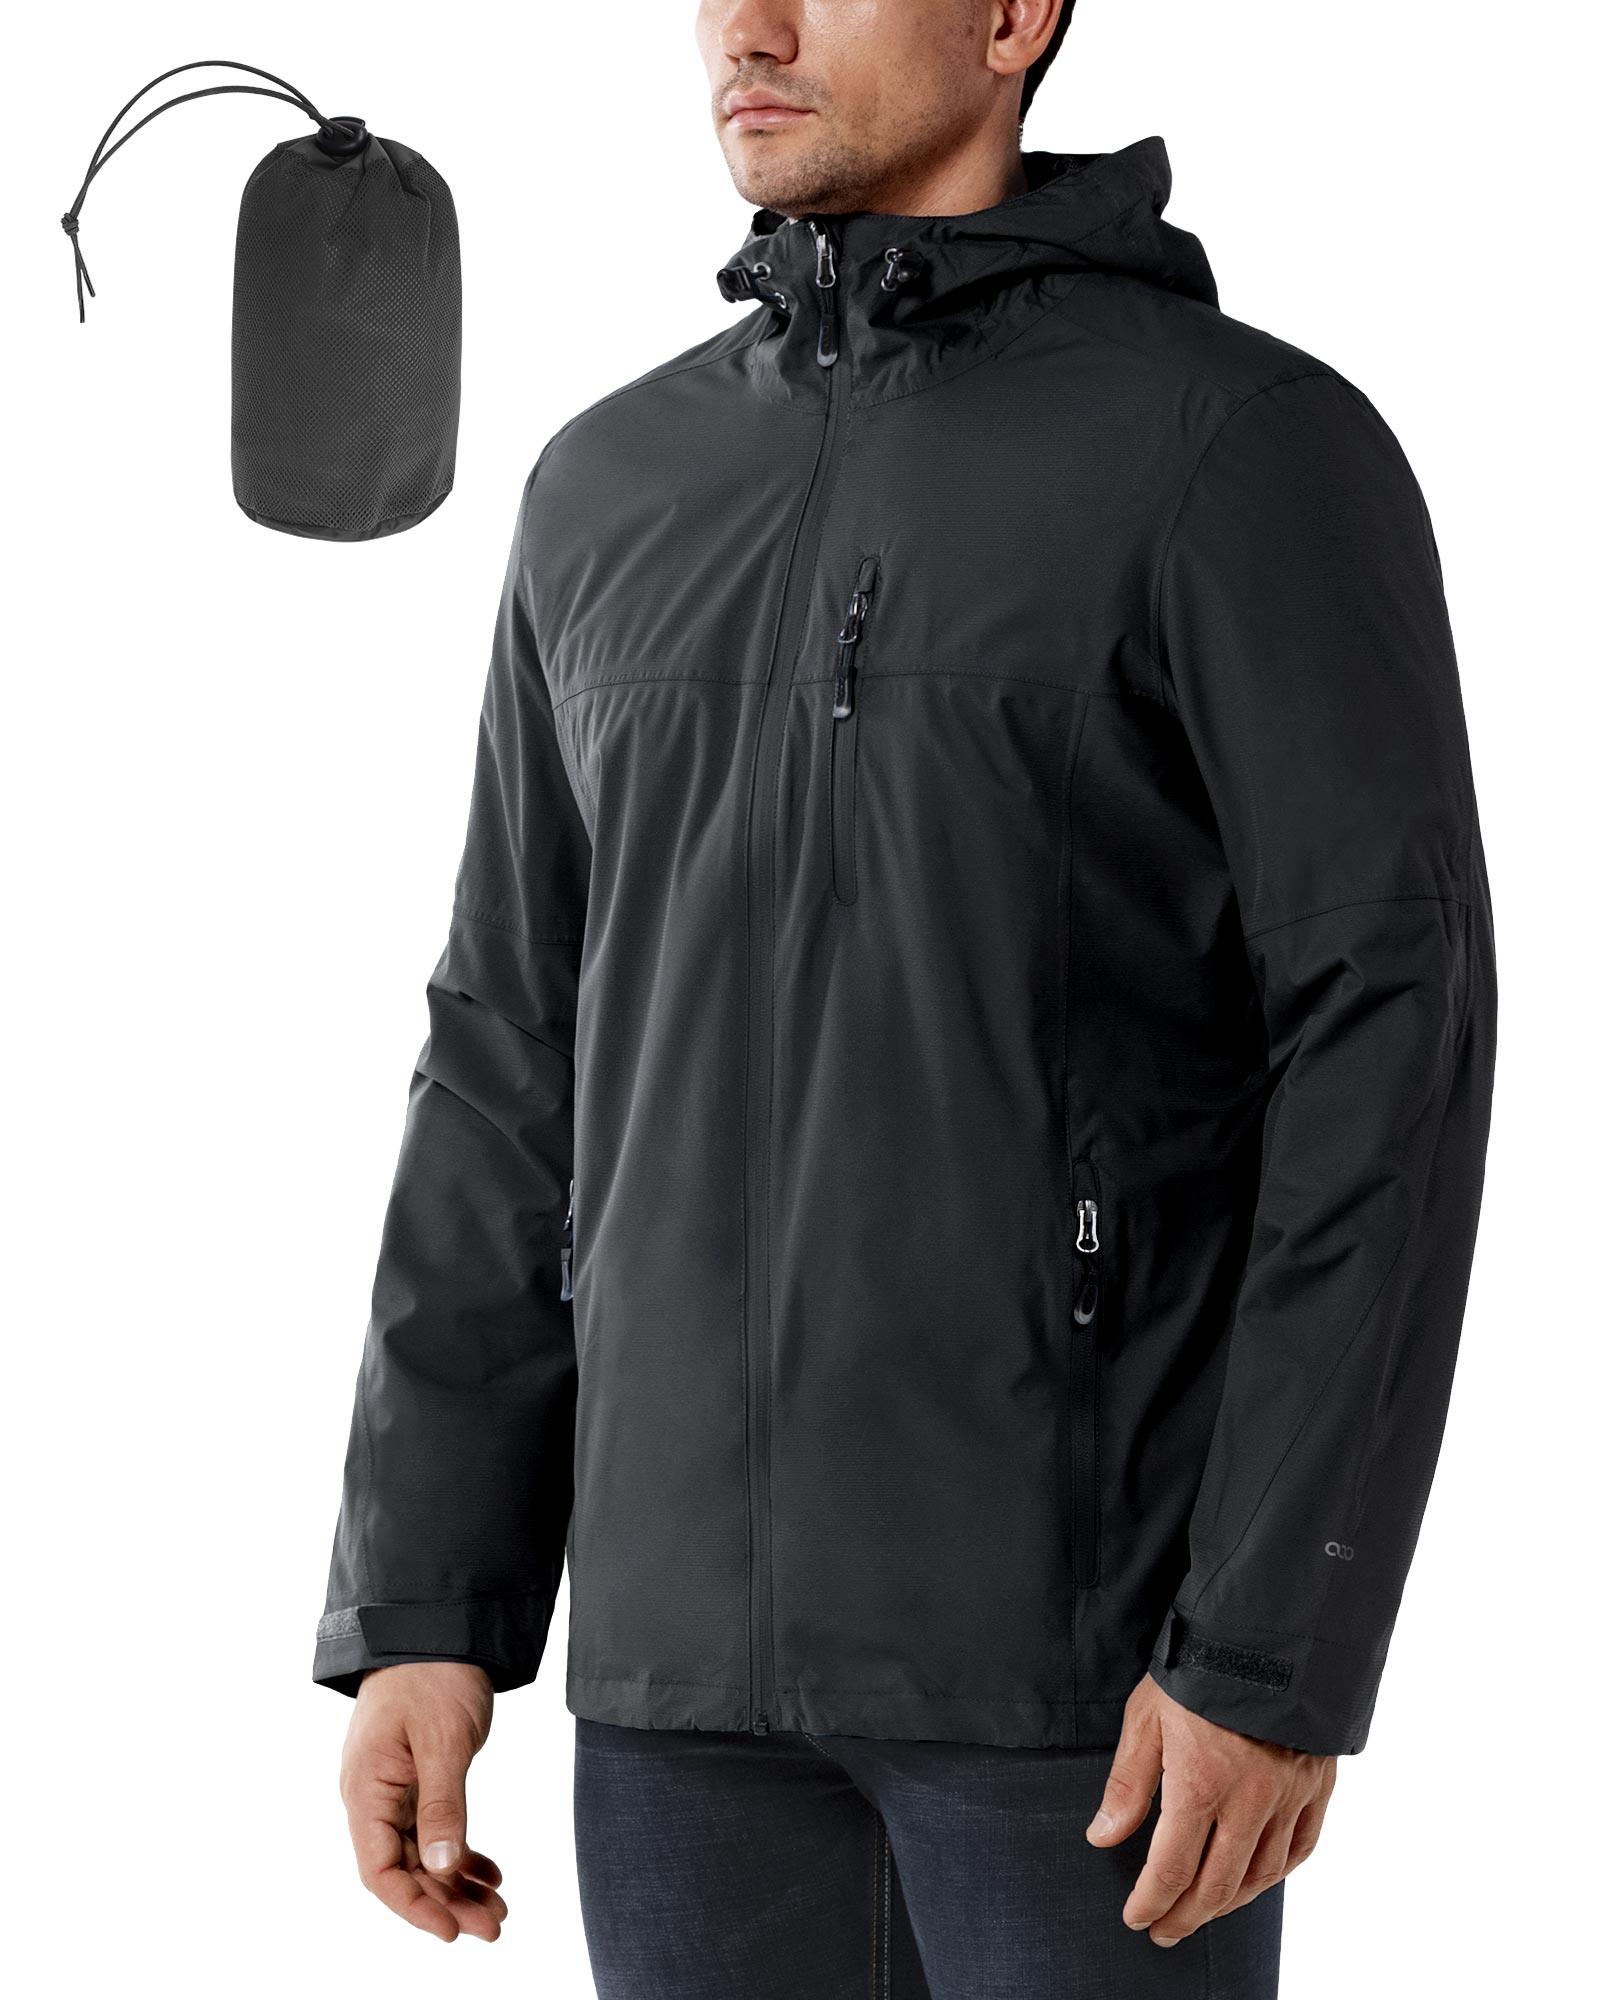 Lv windbreaker jacket for men